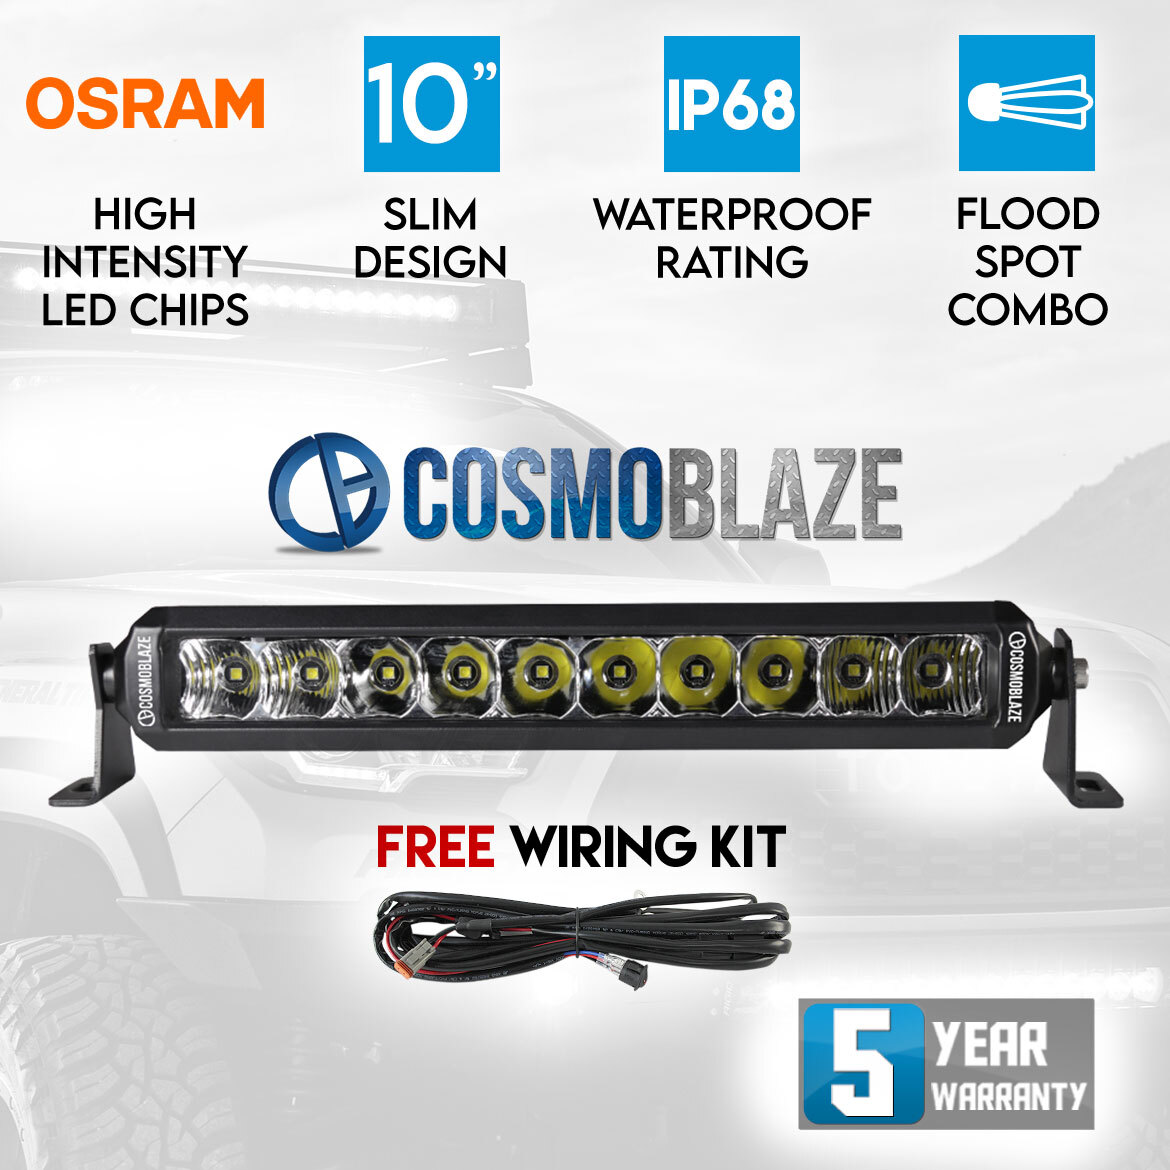 Cosmoblaze 10 Inch Osram LED Light Bar Driving 1 Row Flood Spot Combo Beam